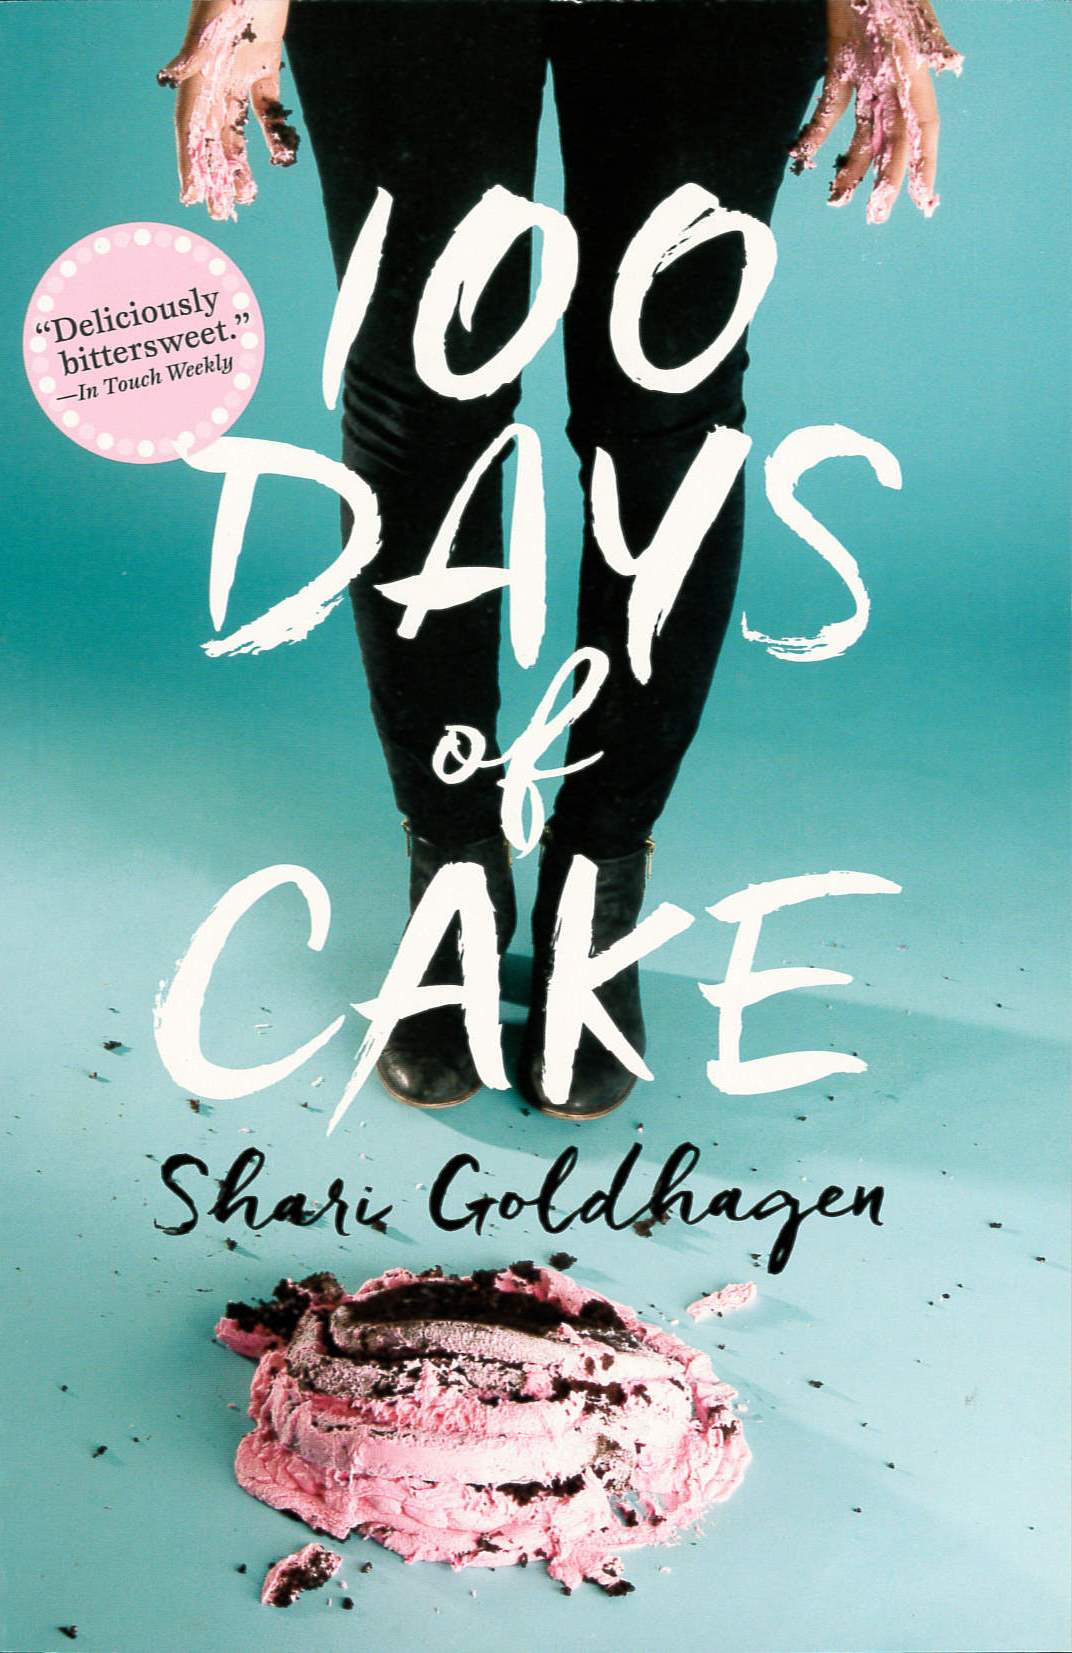 100 days of cake /